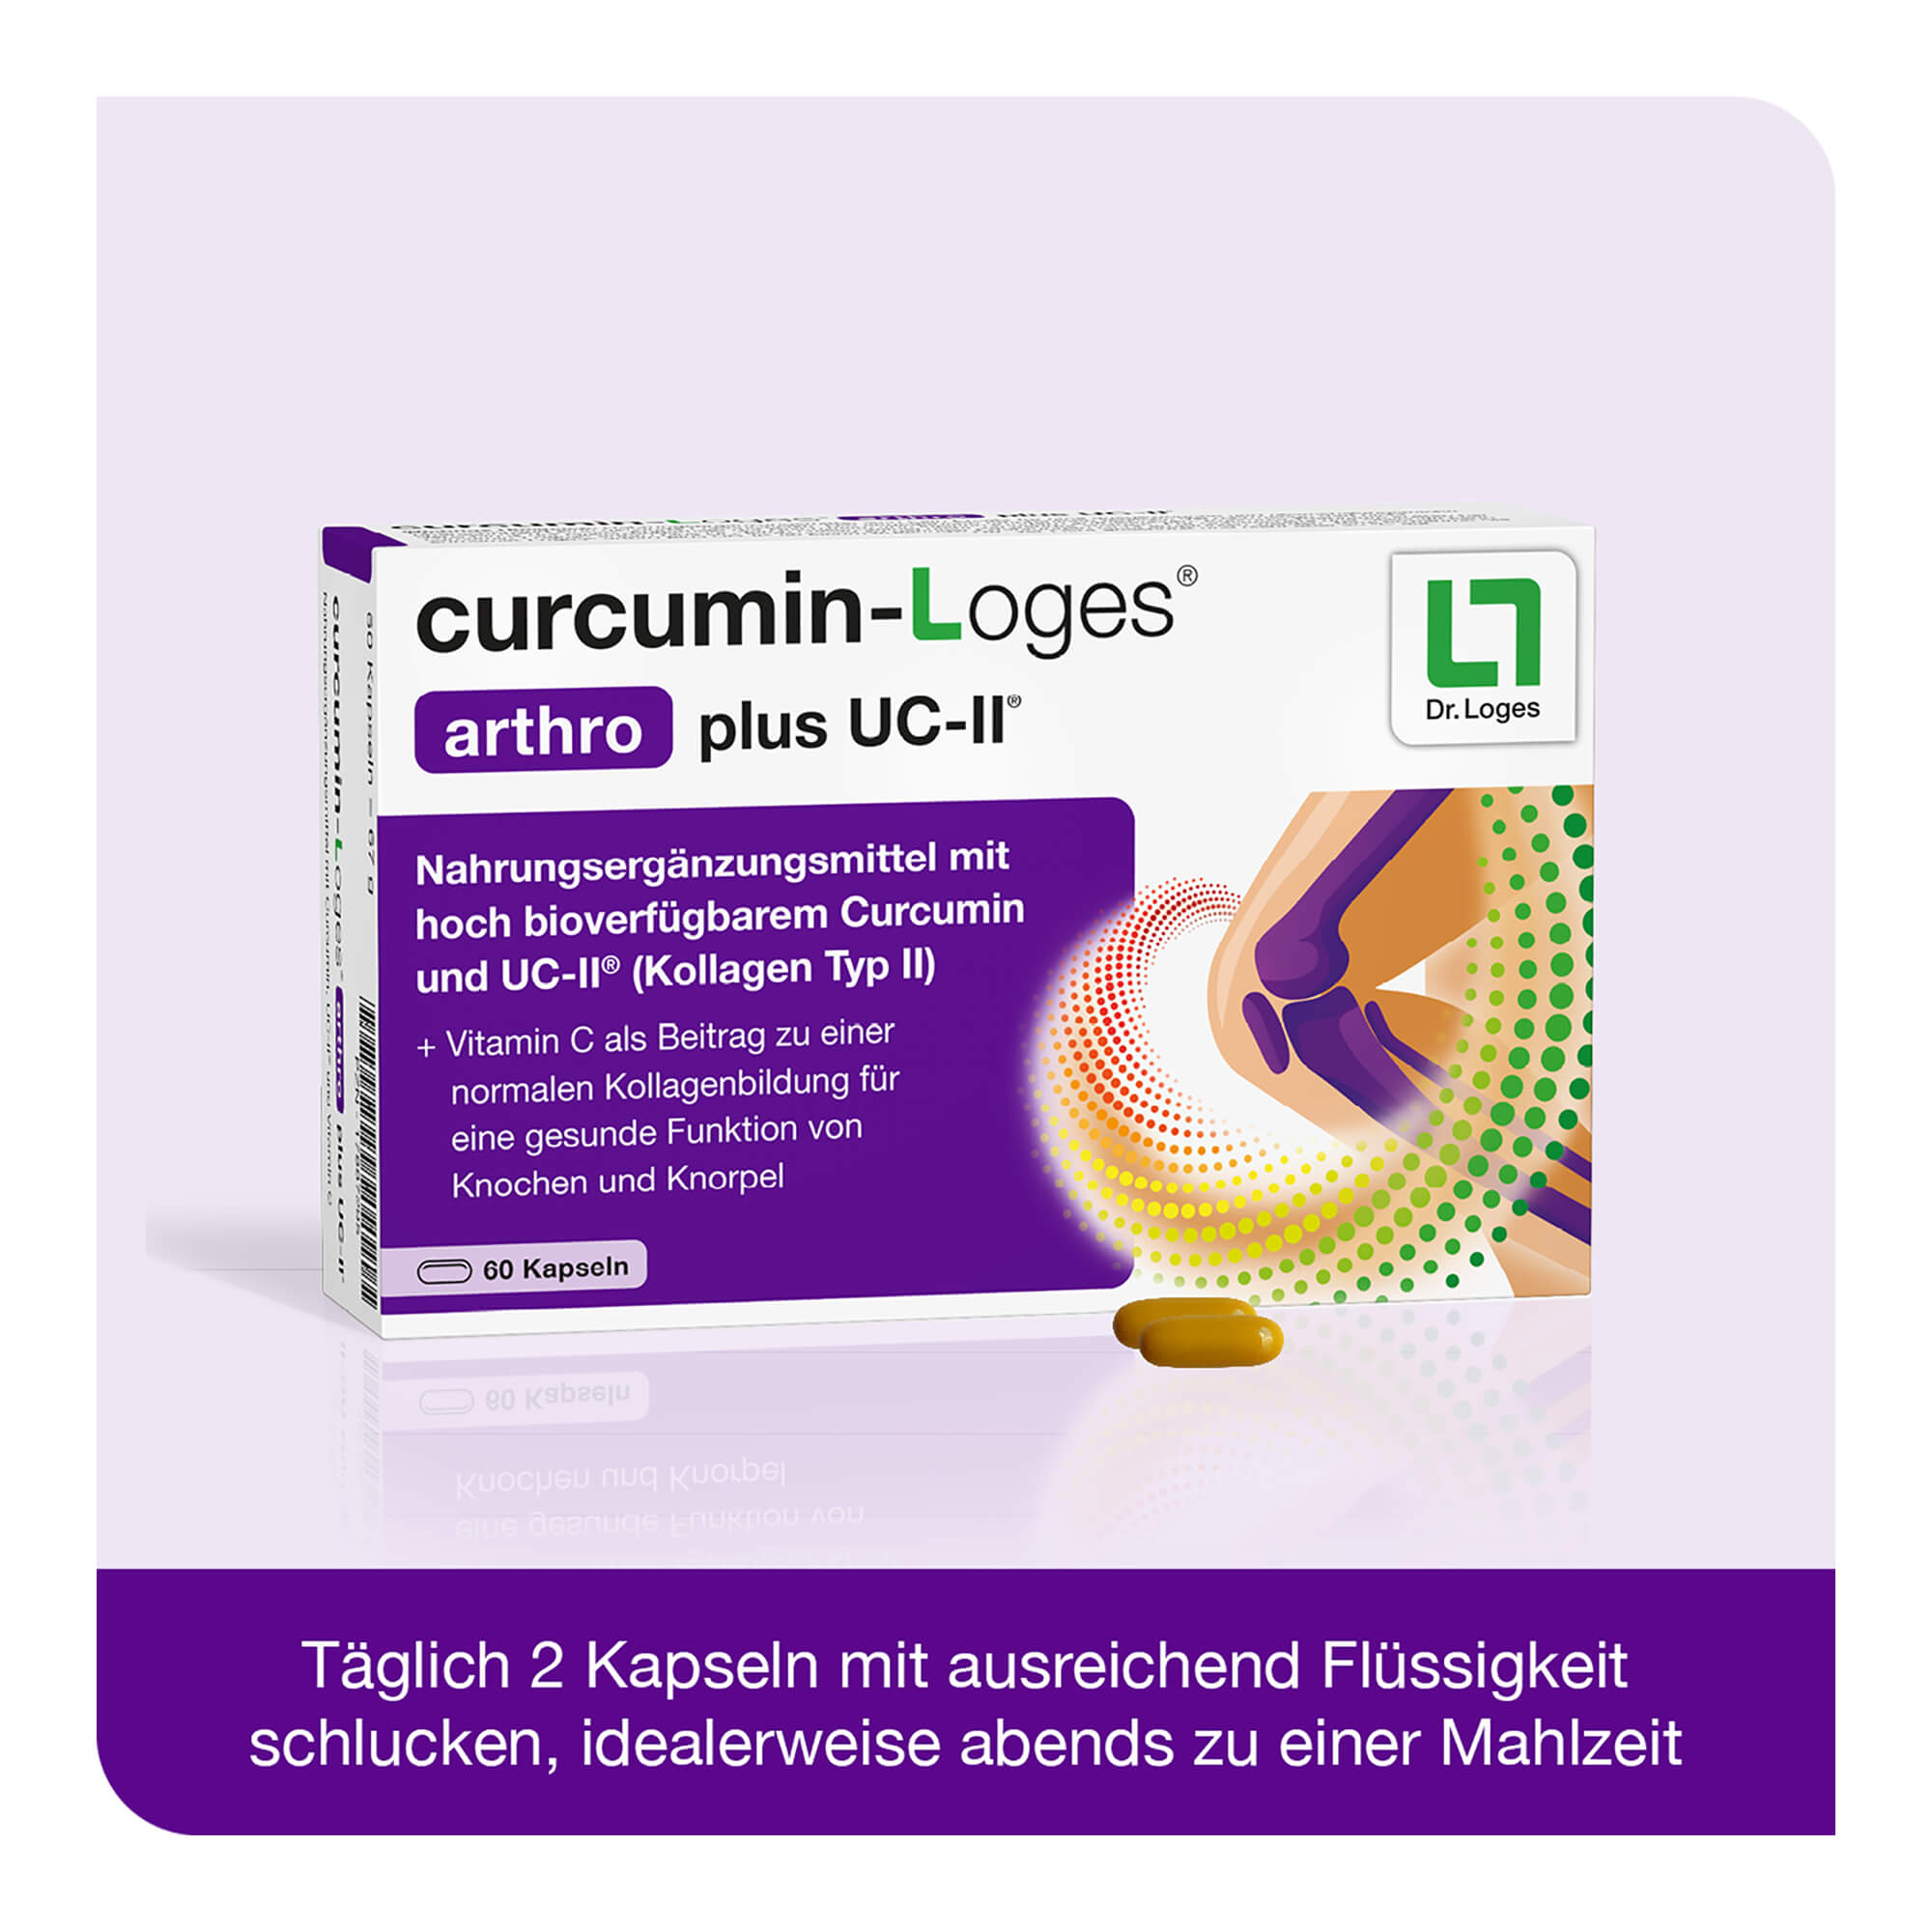 Grafik Curcumin-Loges arthro plus UC-II Kapseln Anwendung